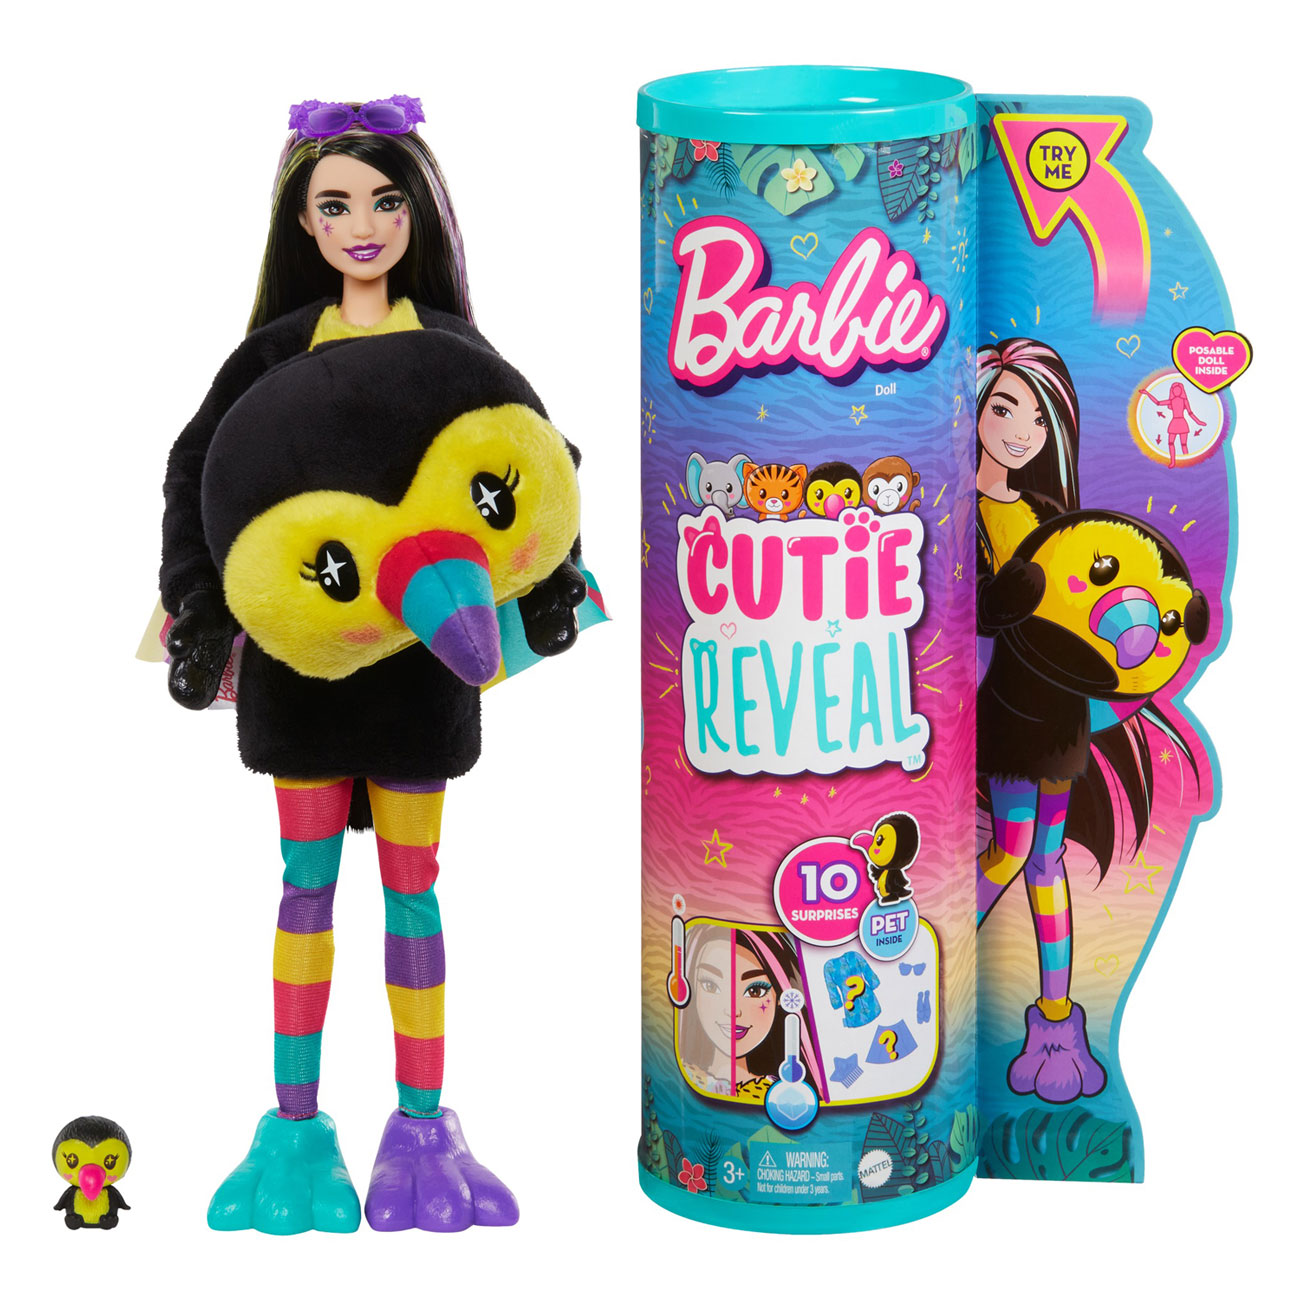 Acheter Barbie Cutie Reveal Jungle - Toucan en ligne?